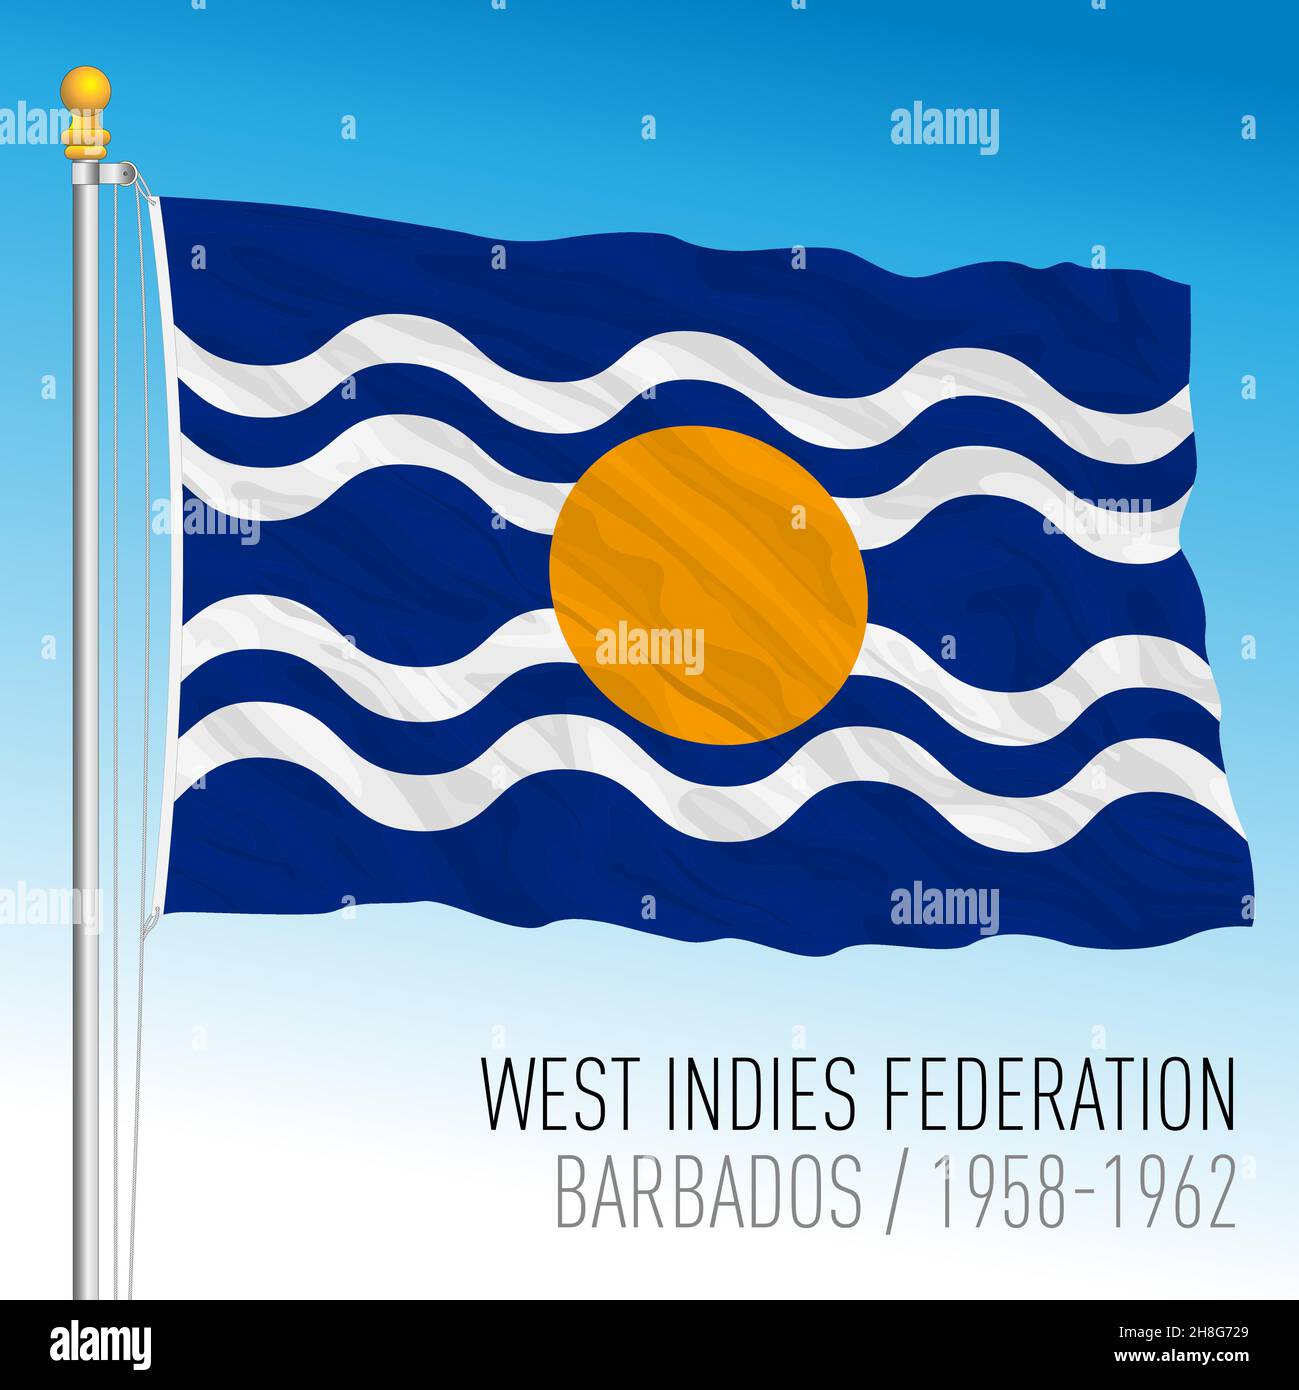 West Indies Federation historische Flagge, Barbados, 1958 - 1962, Vektorgrafik Stock Vektor